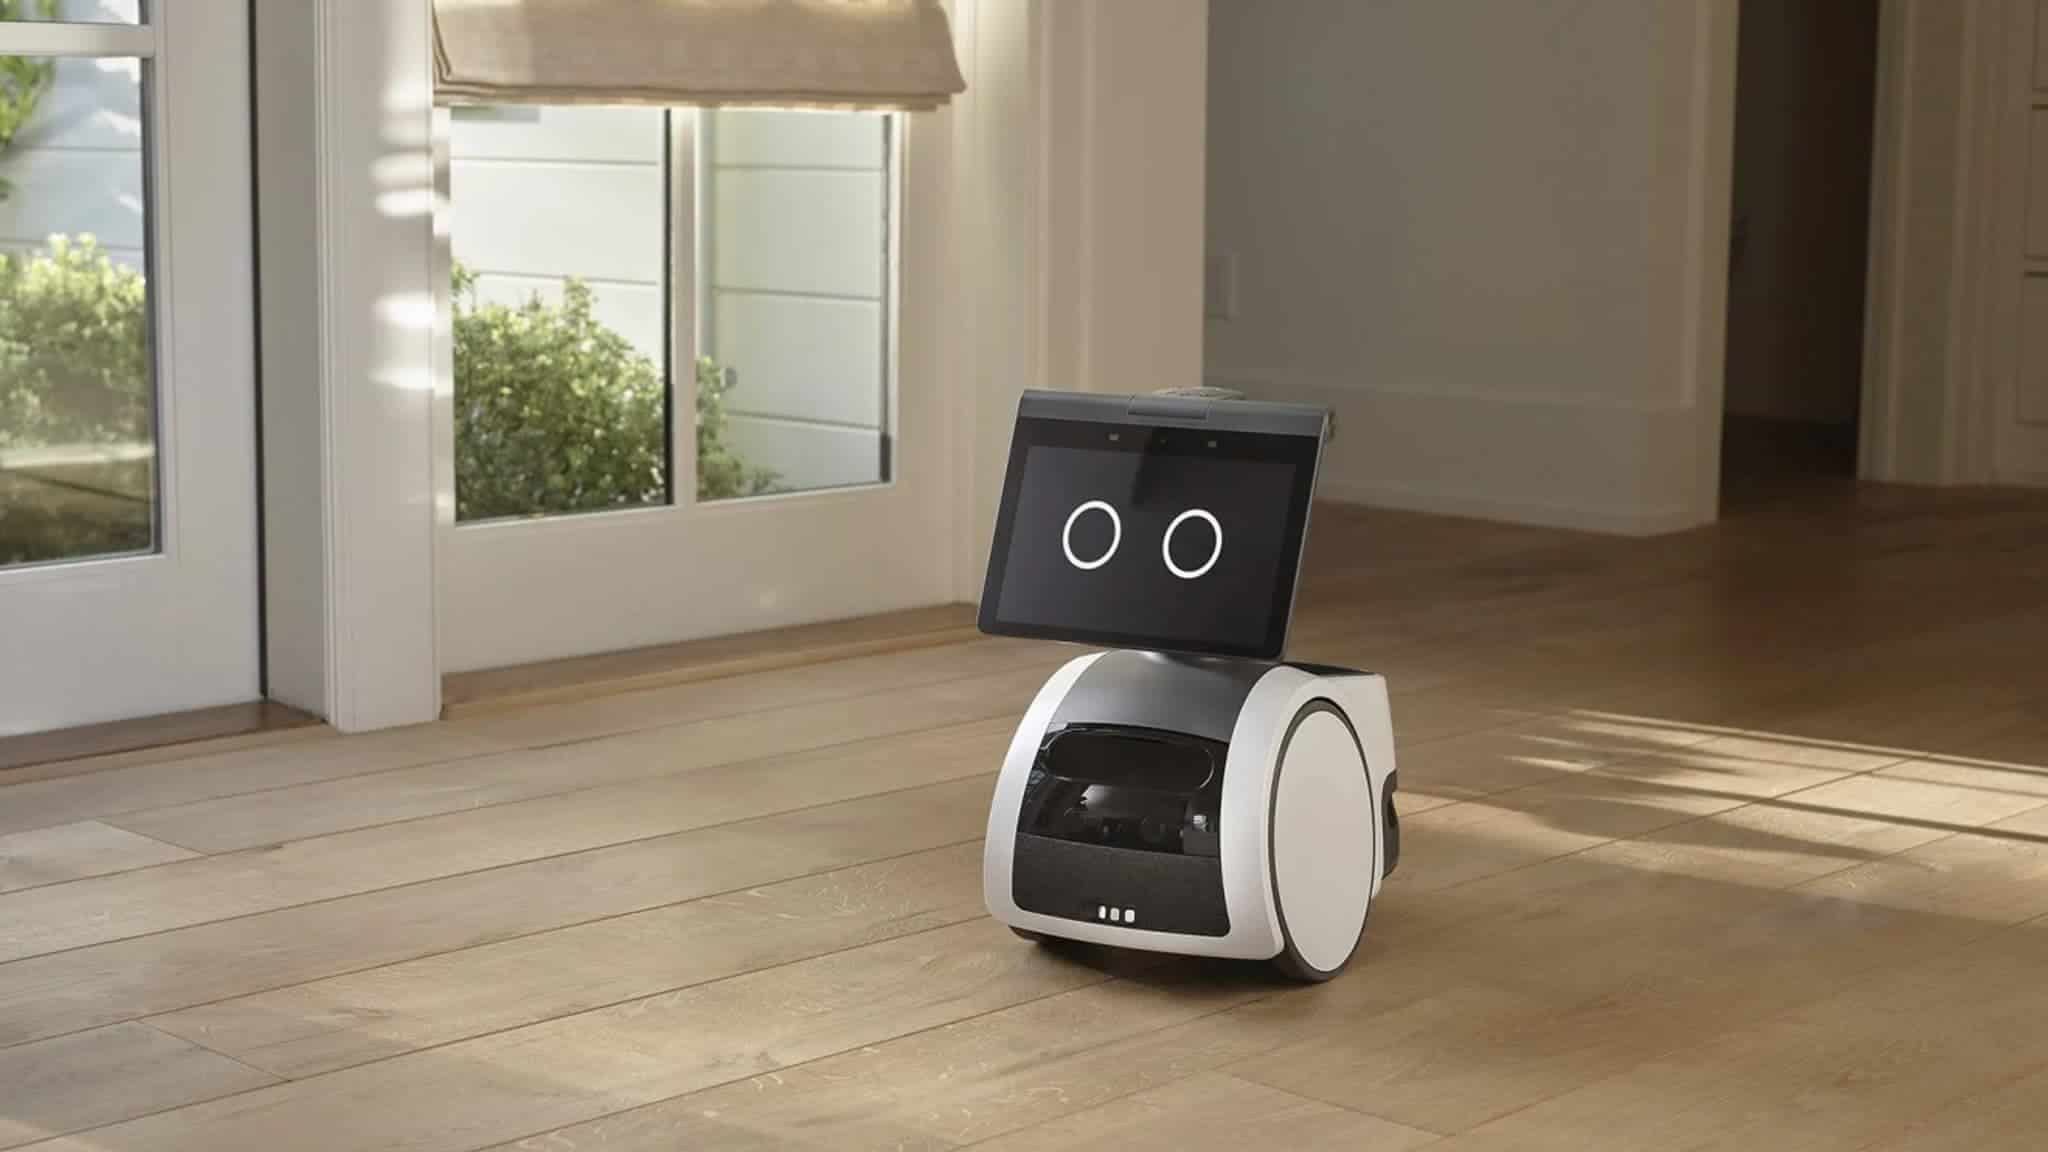 Amazon Astro home robot is ‘Terrible’, say developers